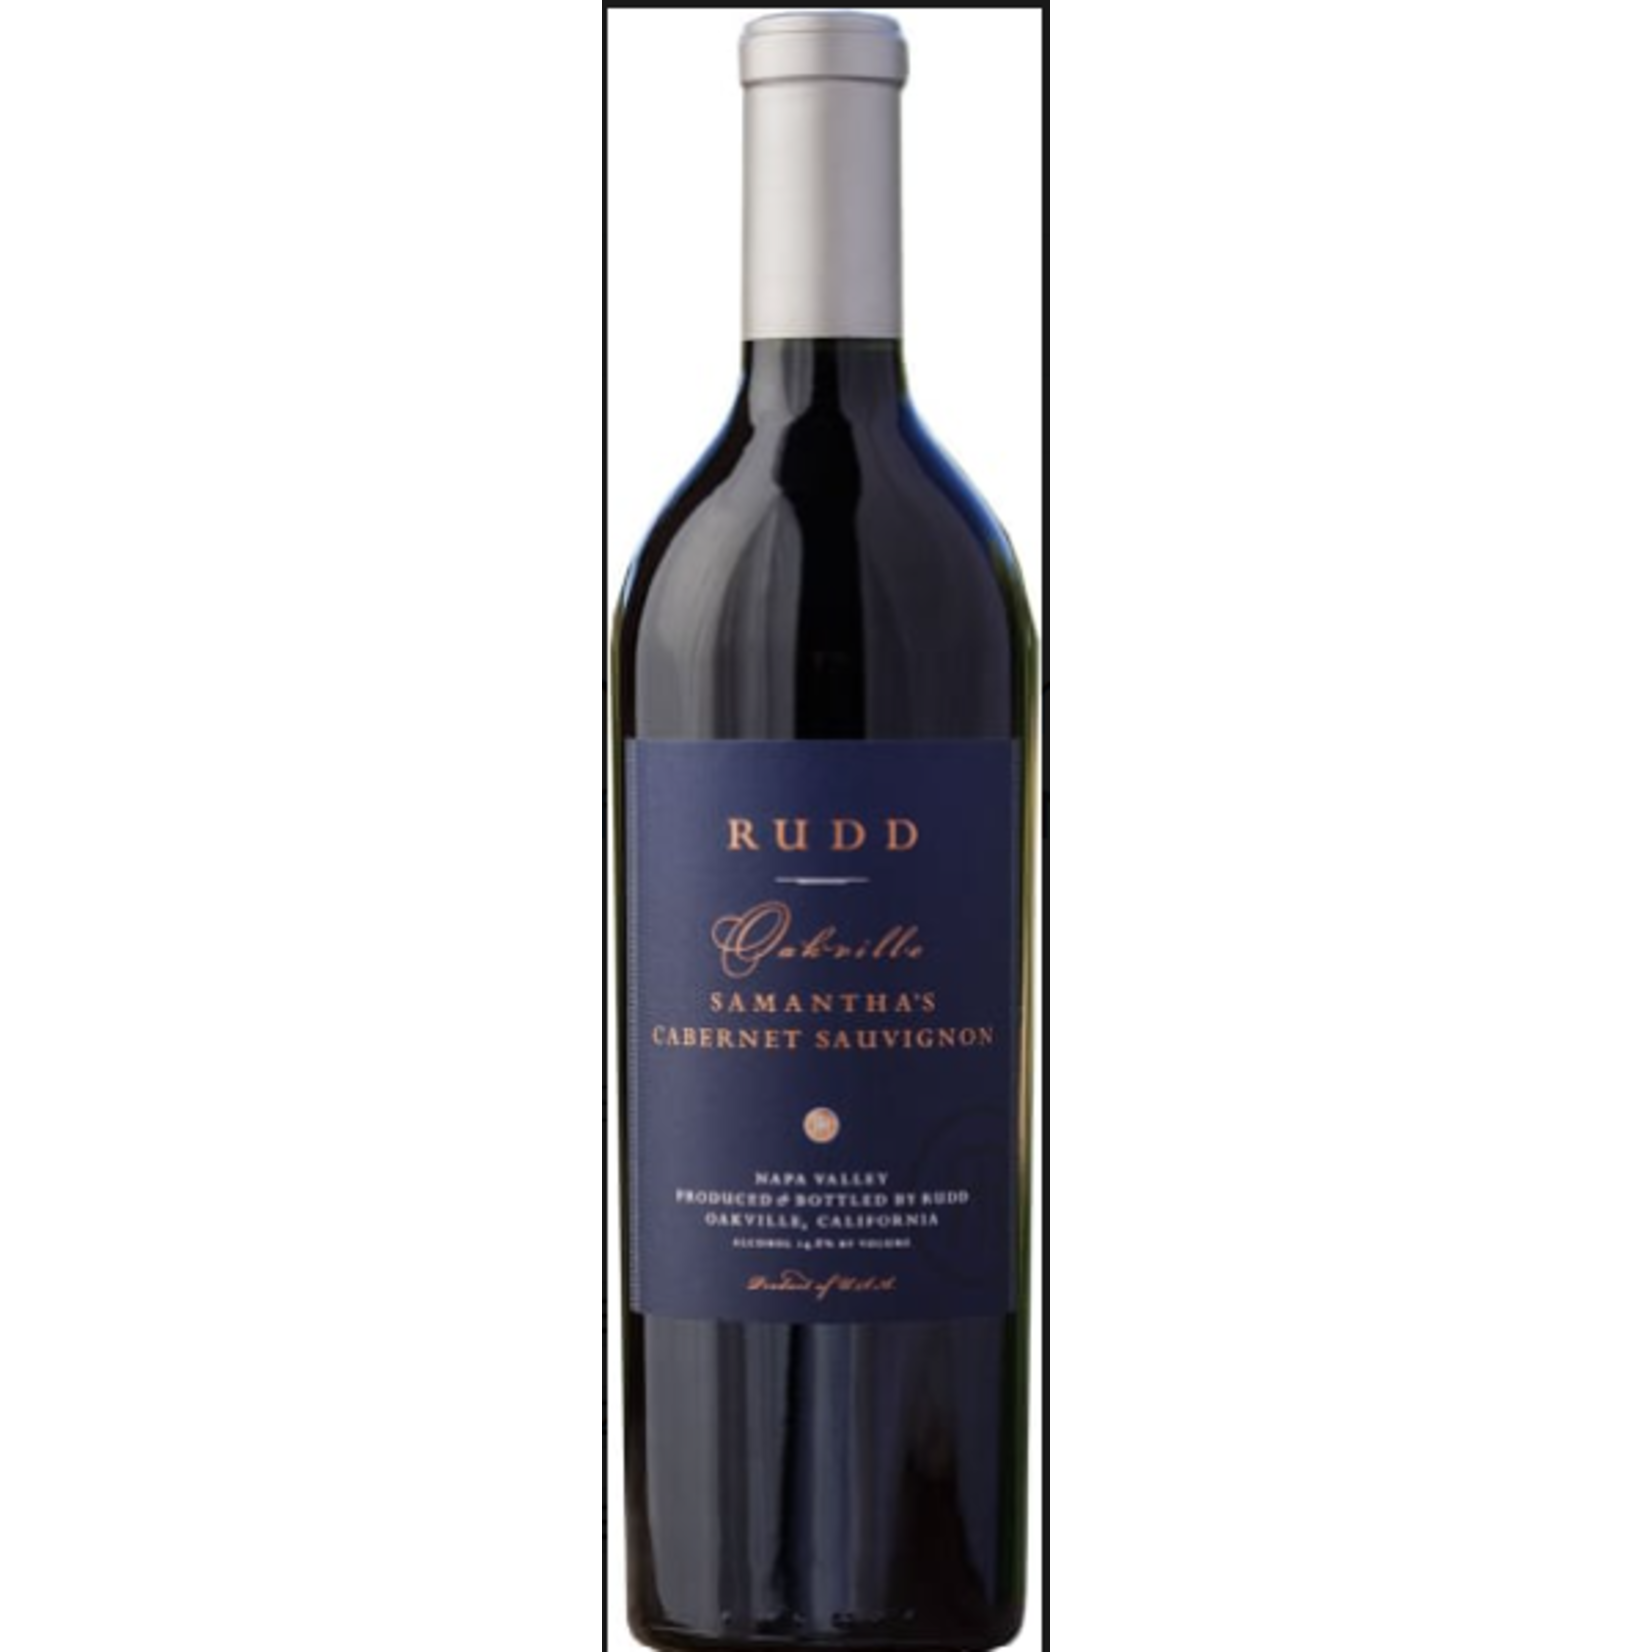 Rudd Rudd Samantha's Vineyard Cabernet Sauvignon 2019 Oakville, California